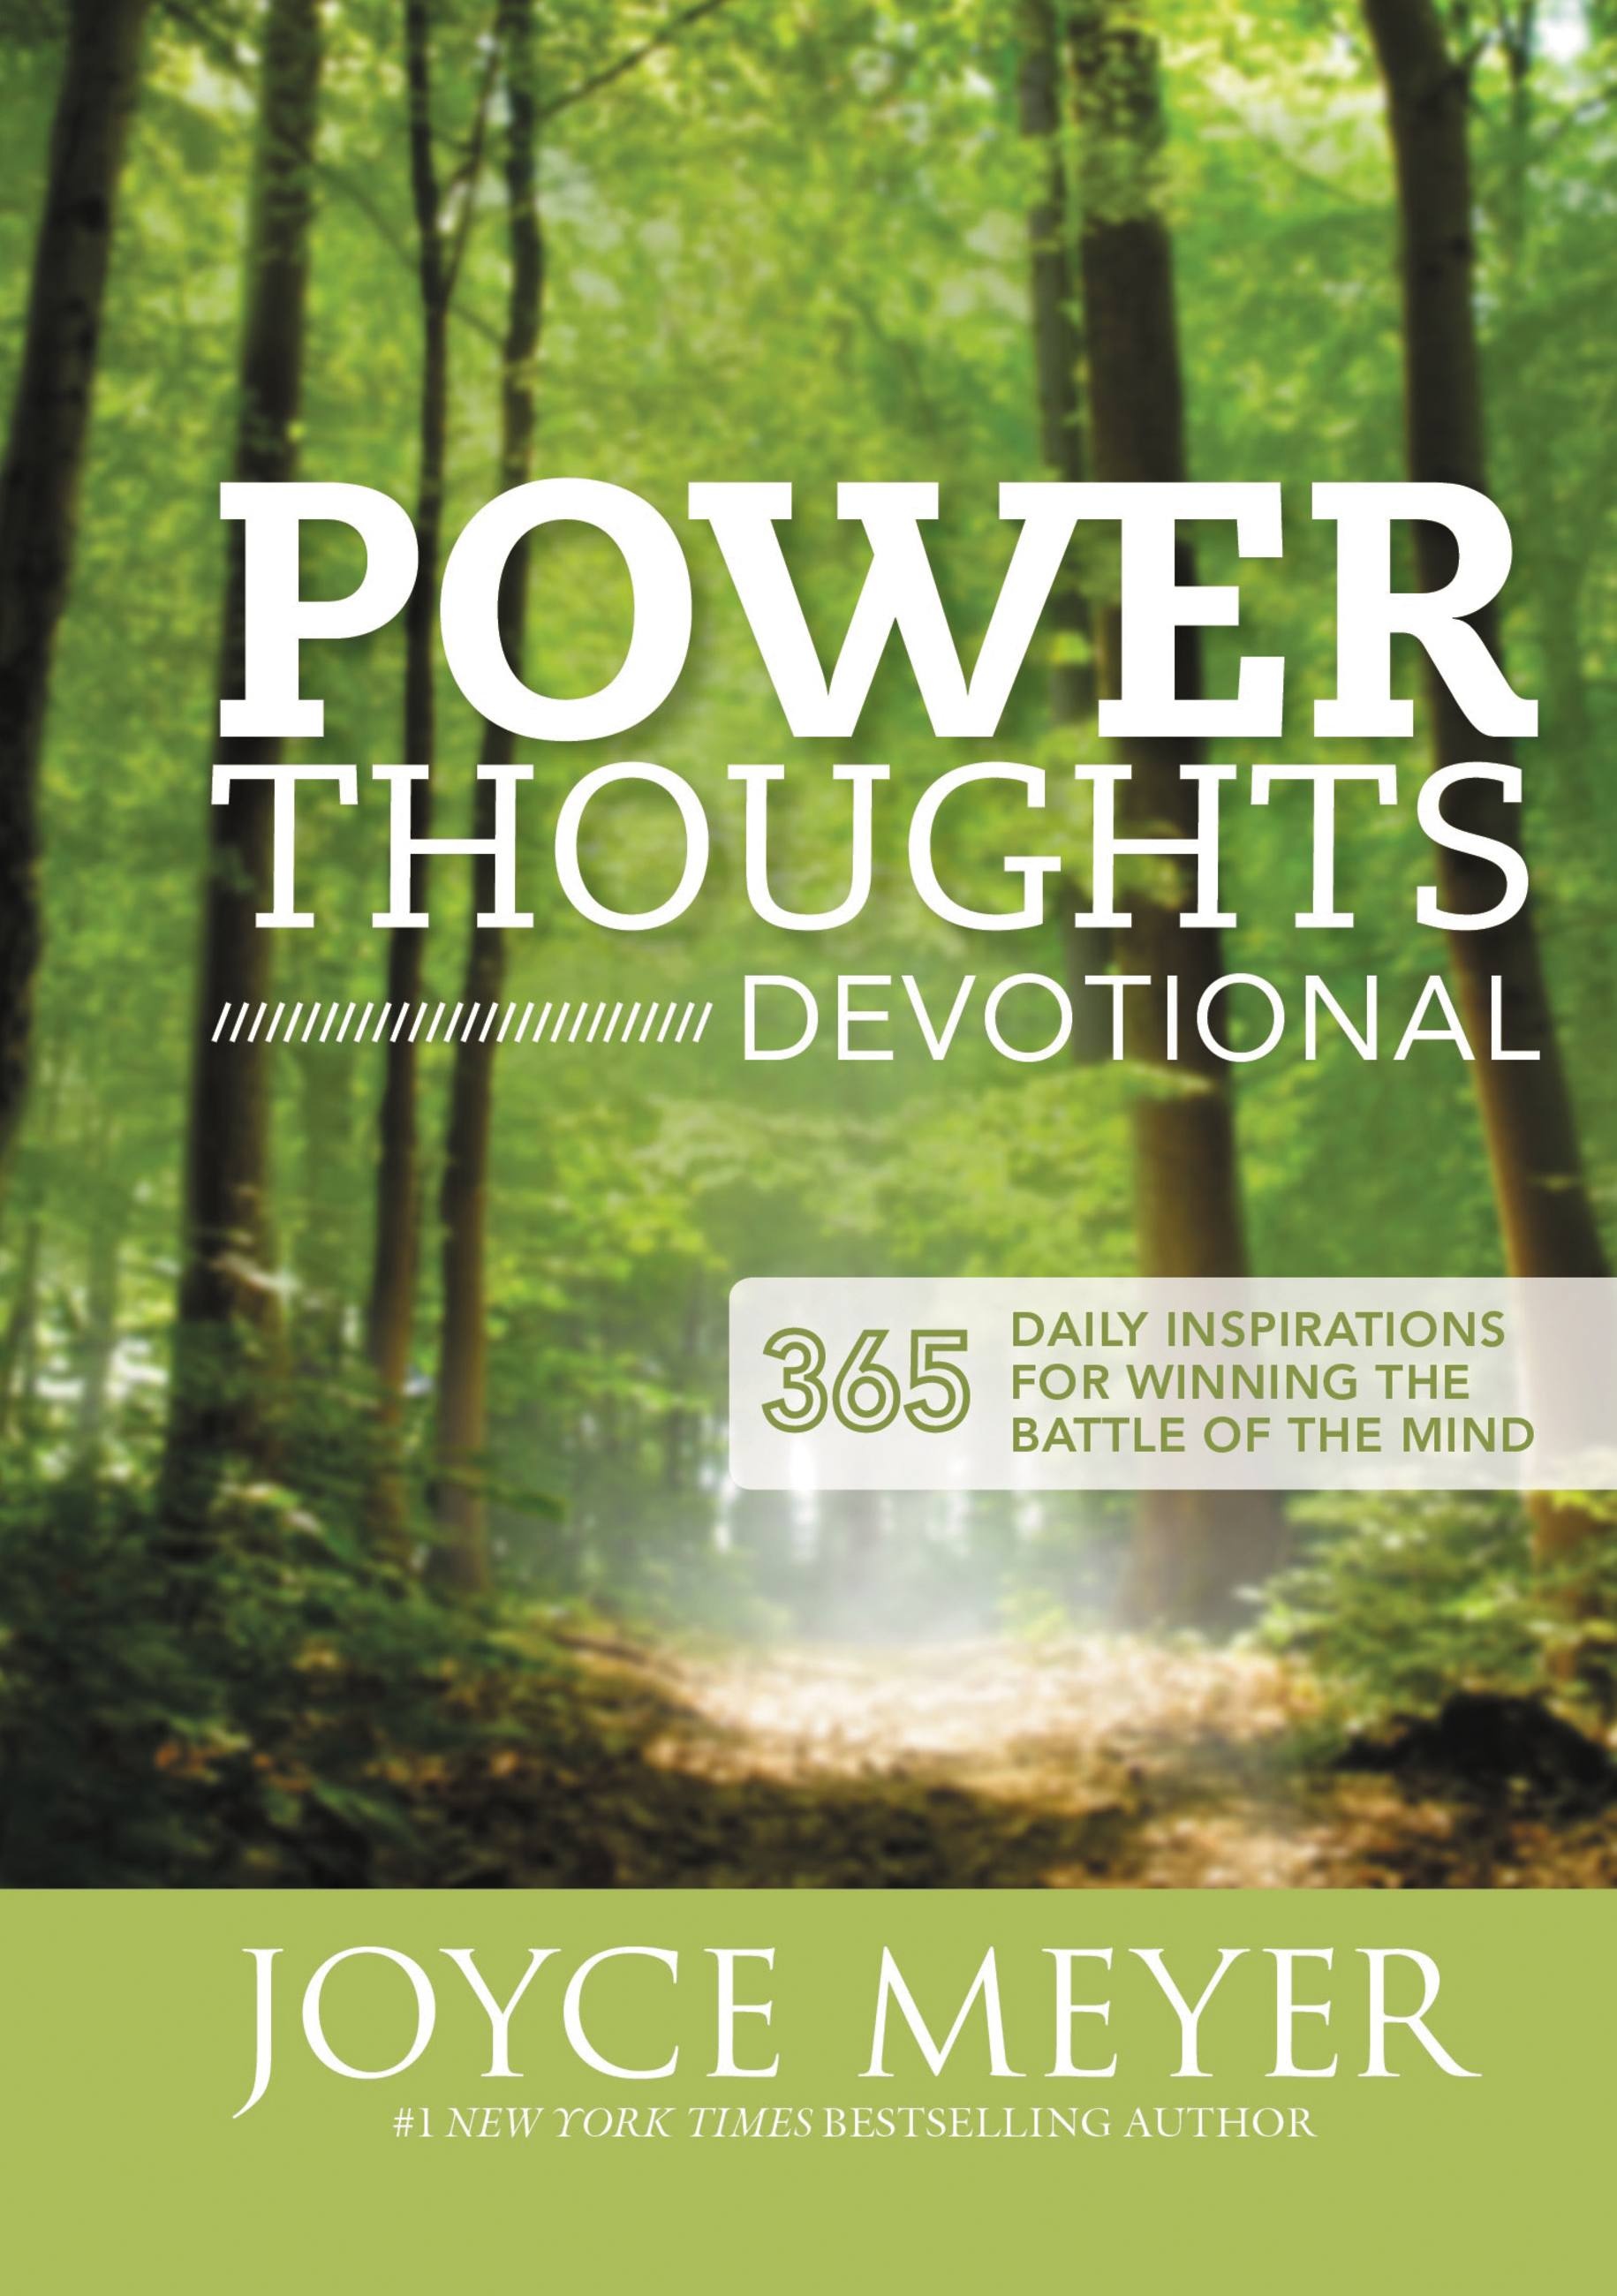 DOWNLOAD PDF: Power Thoughts Devotional by Joyce Meyer 21